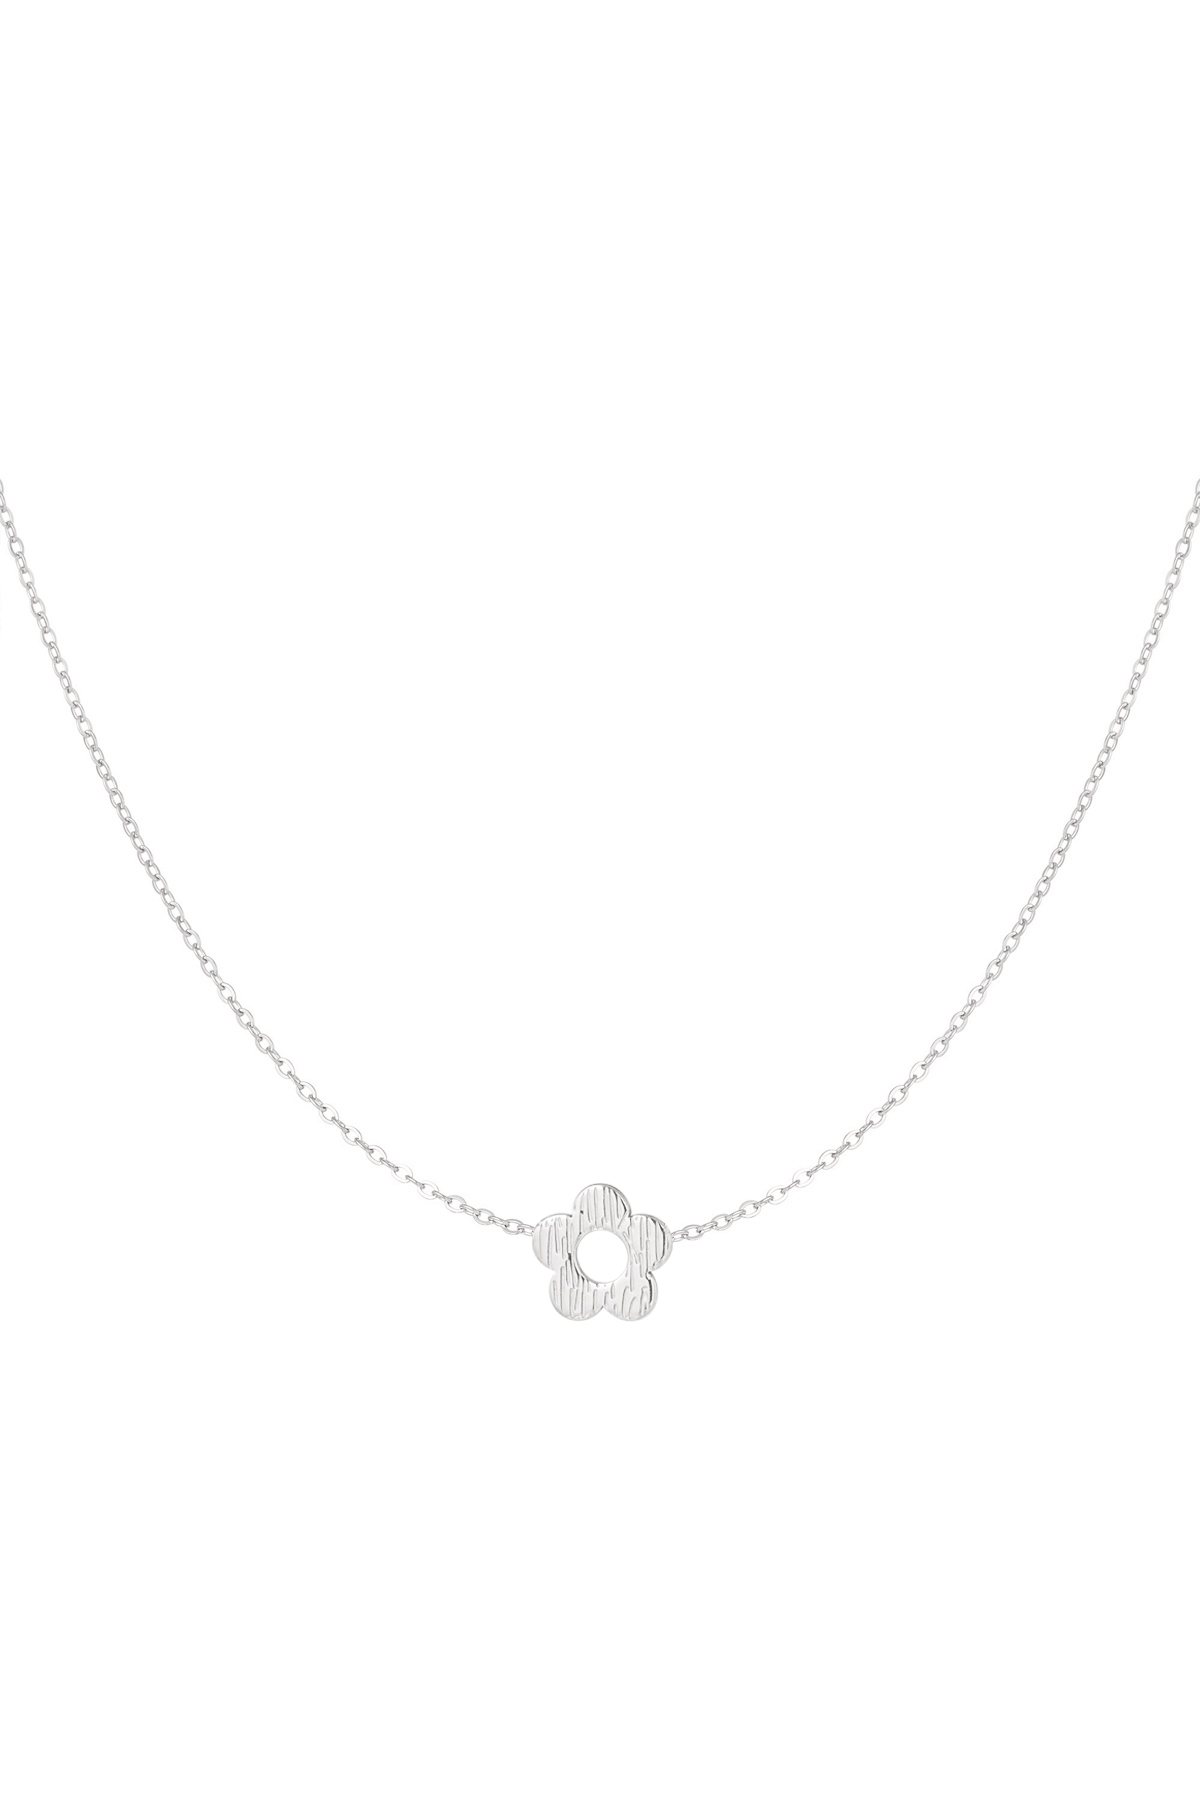 Spring flower necklace - silver h5 